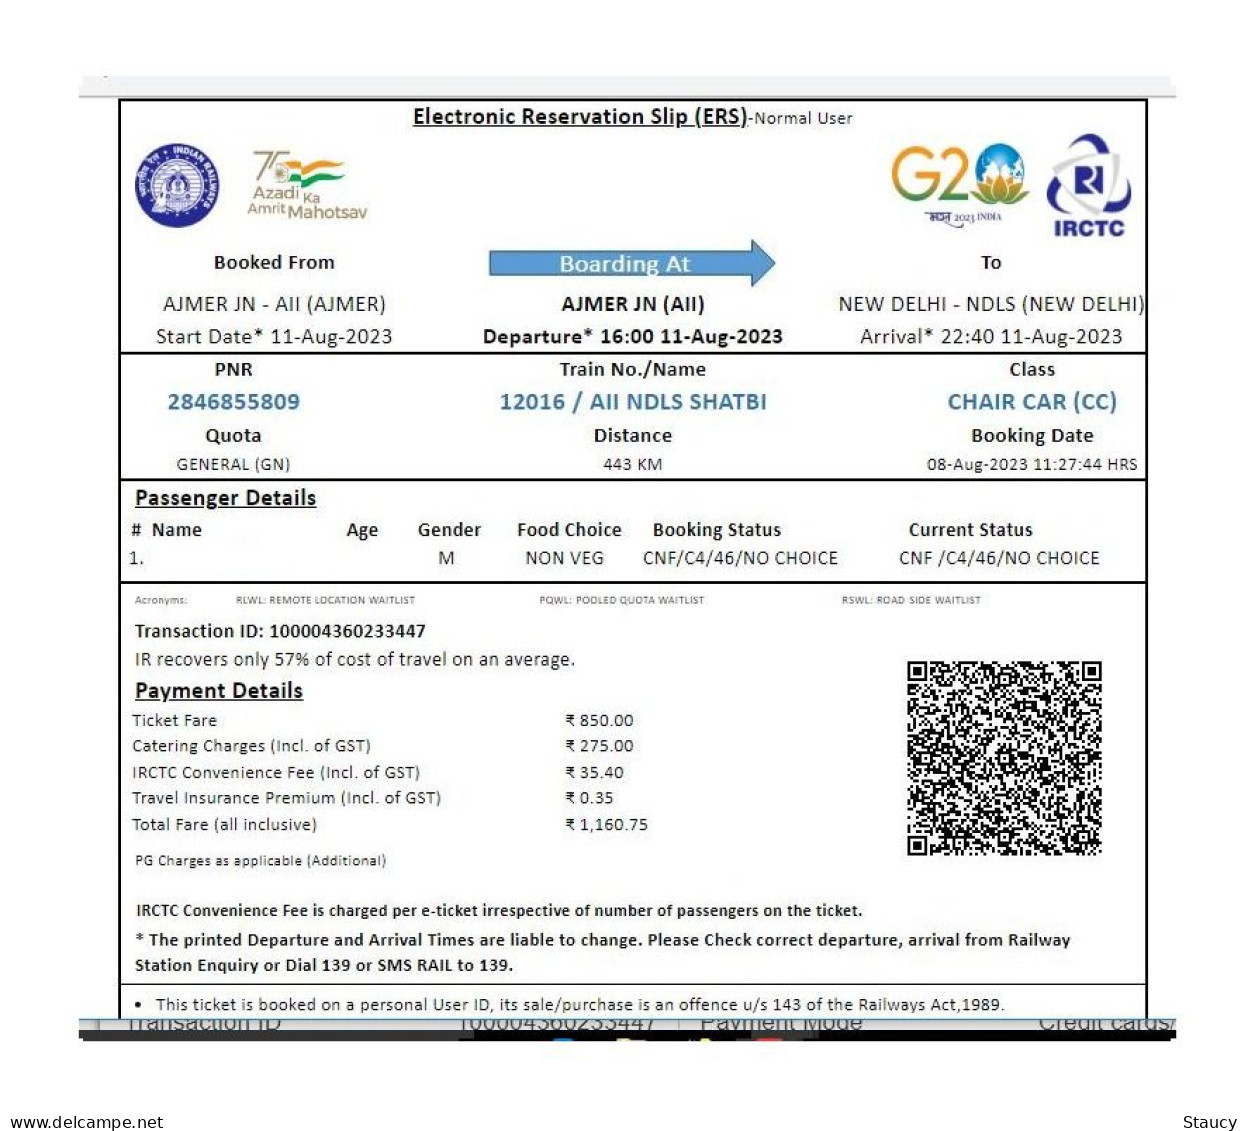 India Railway / Train Ticket With LOGO's Of INDIAN RAILWAYS, IRCTC, G-20 Summit, Azadi Ka Amrit Mahotsav As Per Scan - Welt